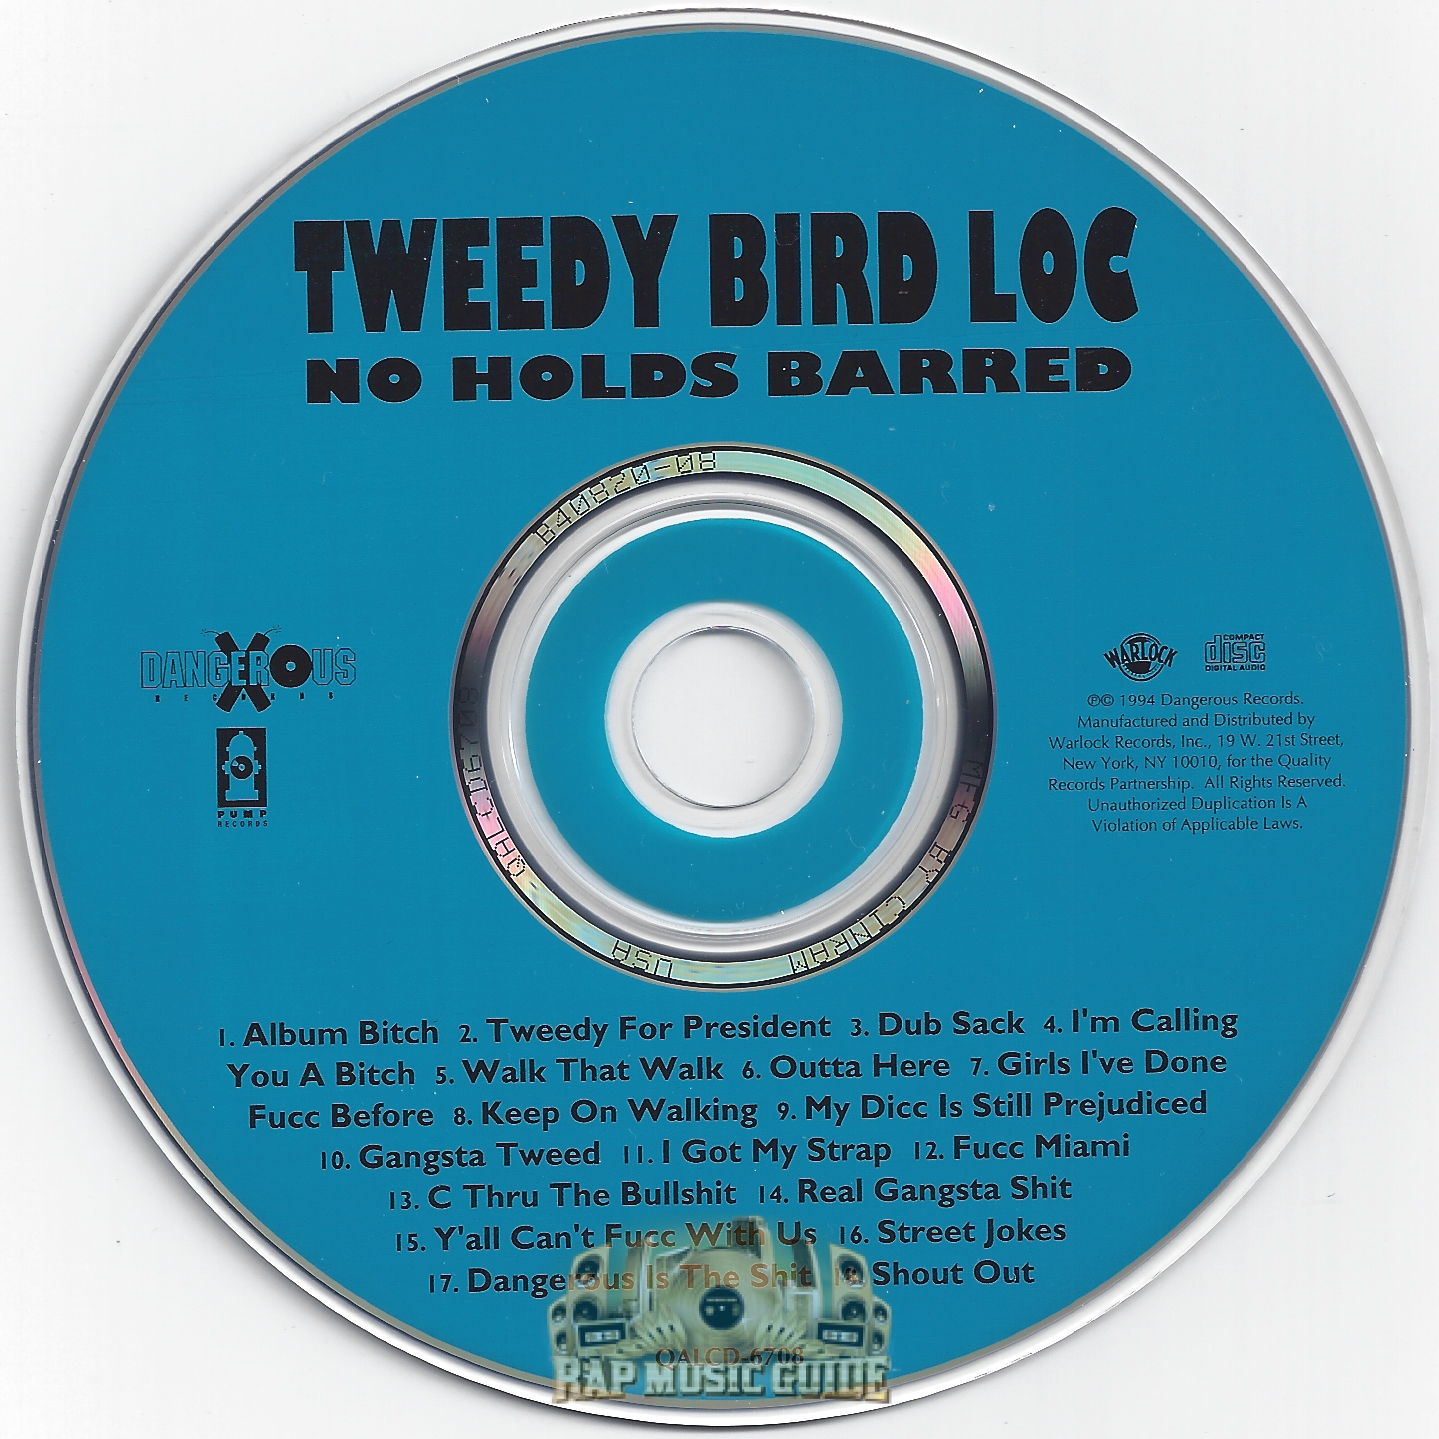 Tweedy Bird Loc - No Holds Barred: CD | Rap Music Guide